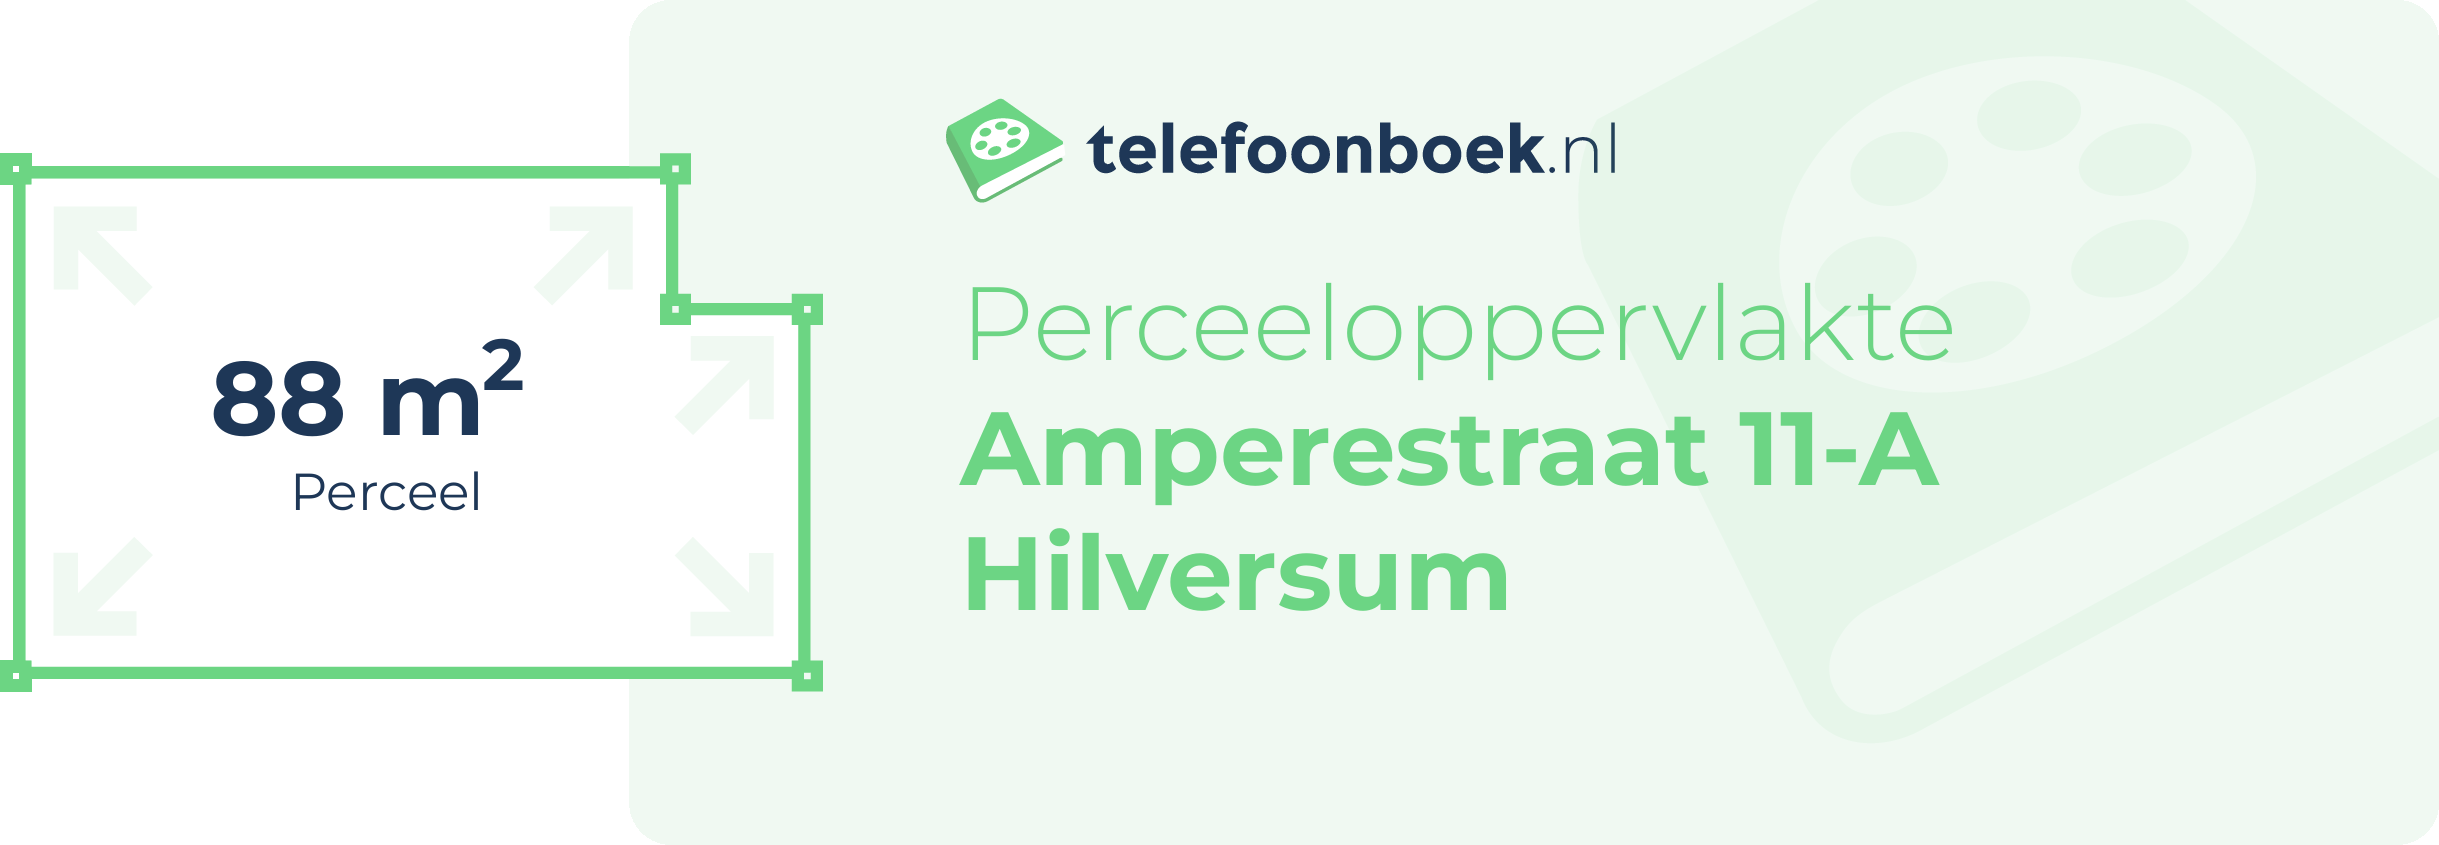 Perceeloppervlakte Amperestraat 11-A Hilversum